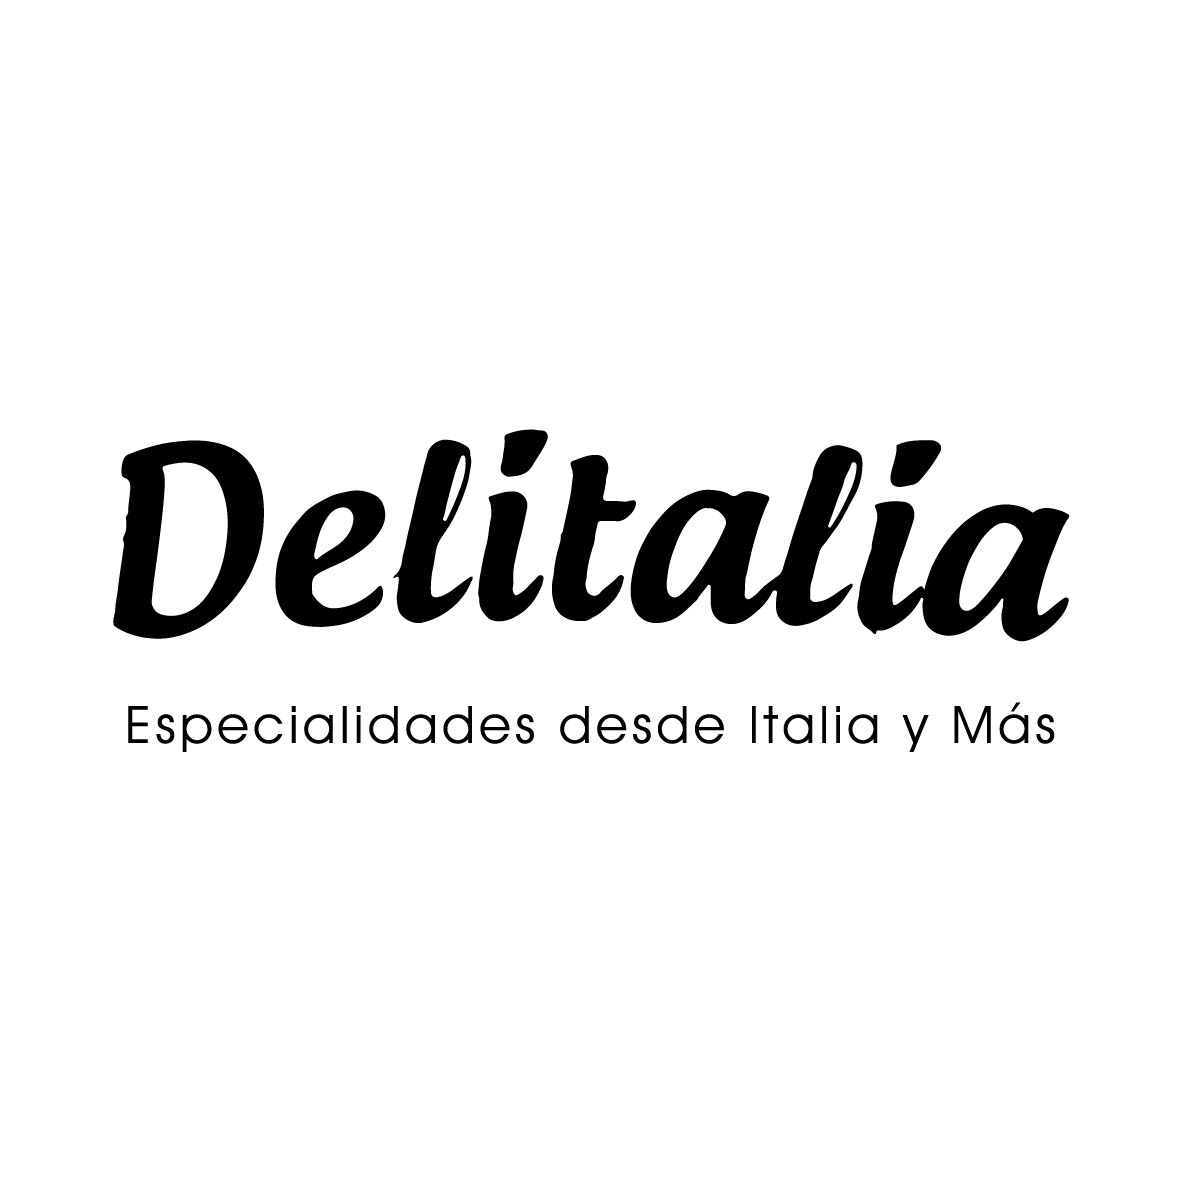 Delitalia-01.png